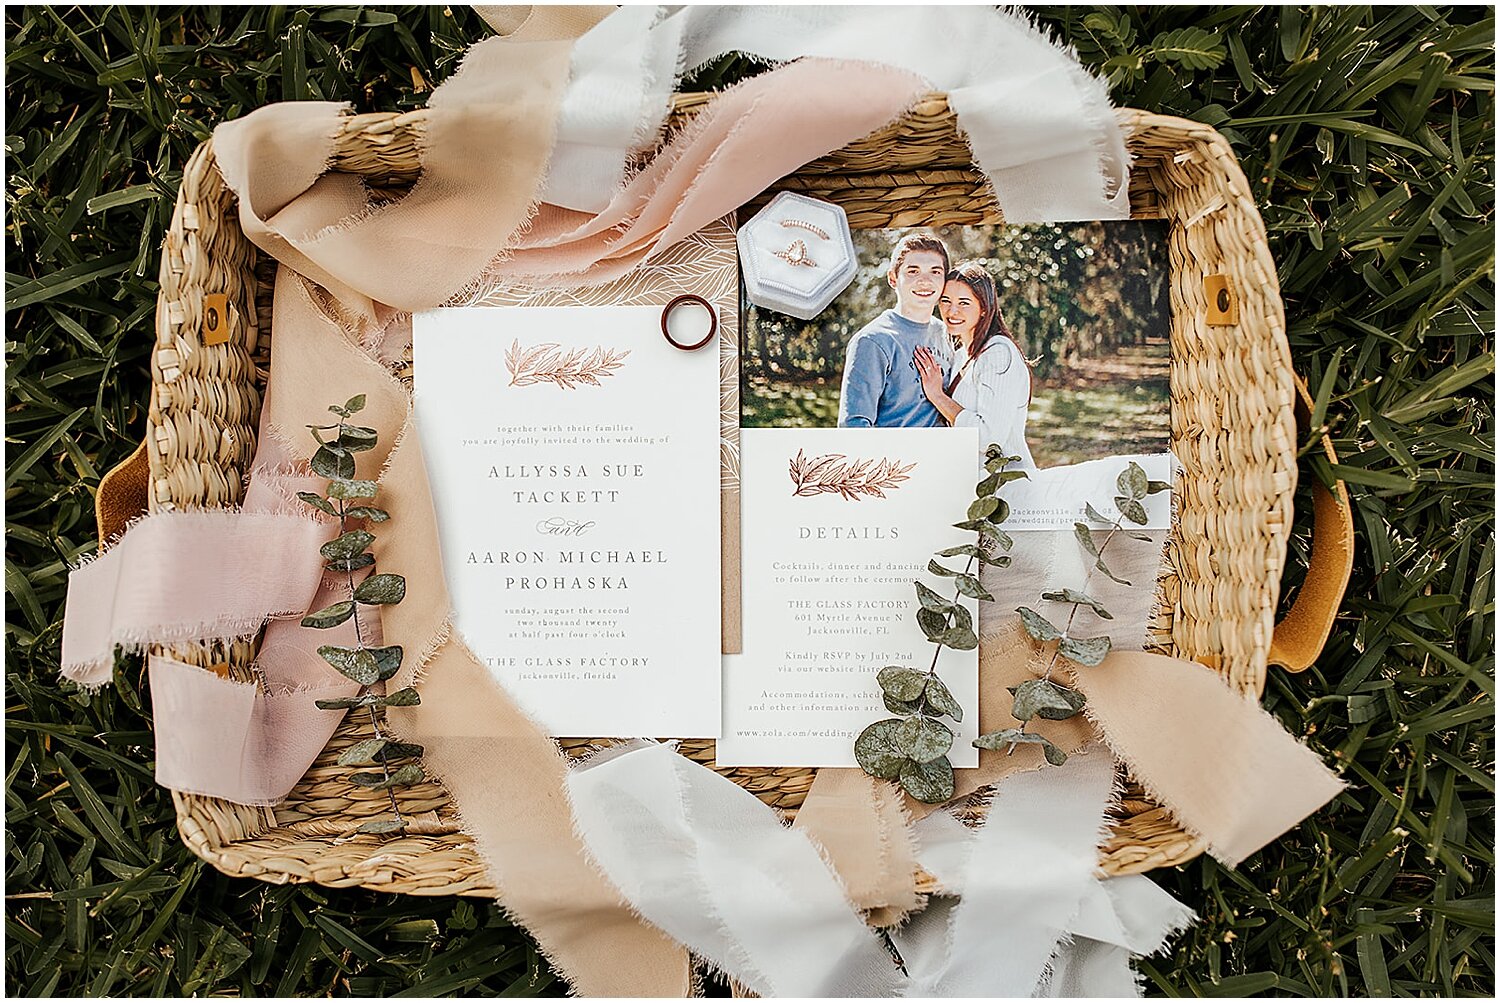  wedding invitation and wedding rings layout 